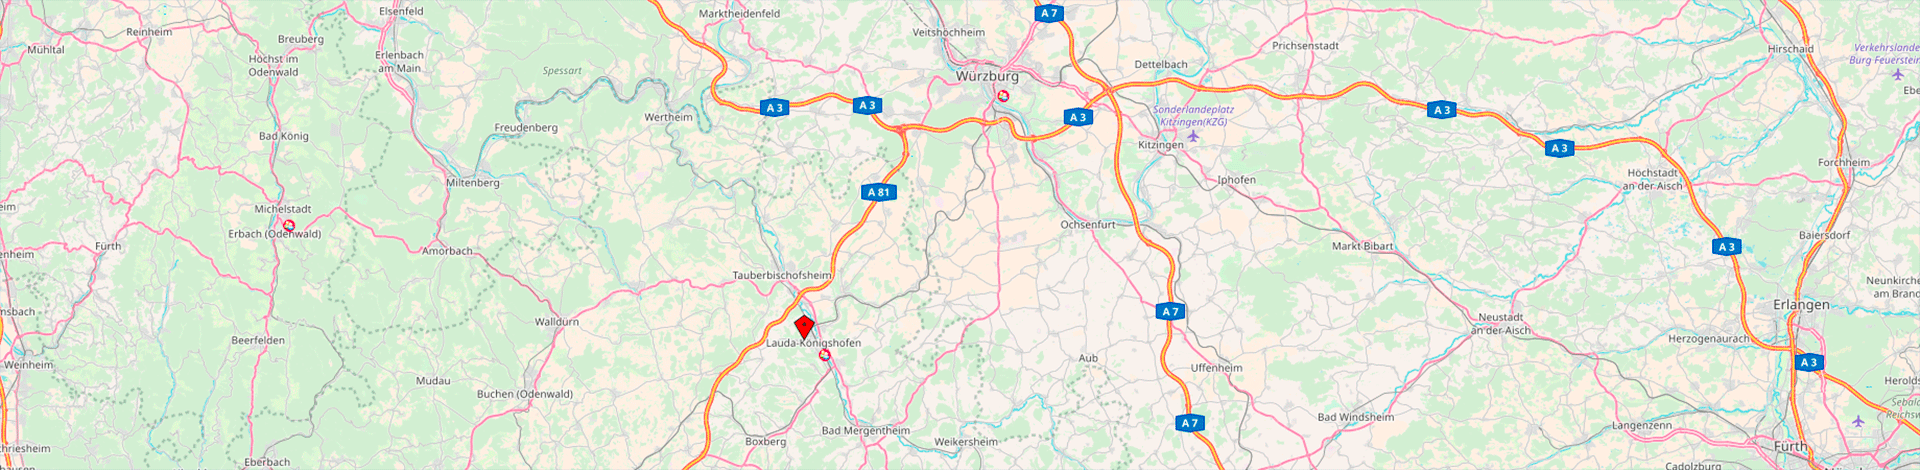 Öffnet Link zu Google Maps - opm ralph  ender - Eisbergstr. 108 - Lauda-Königshofen